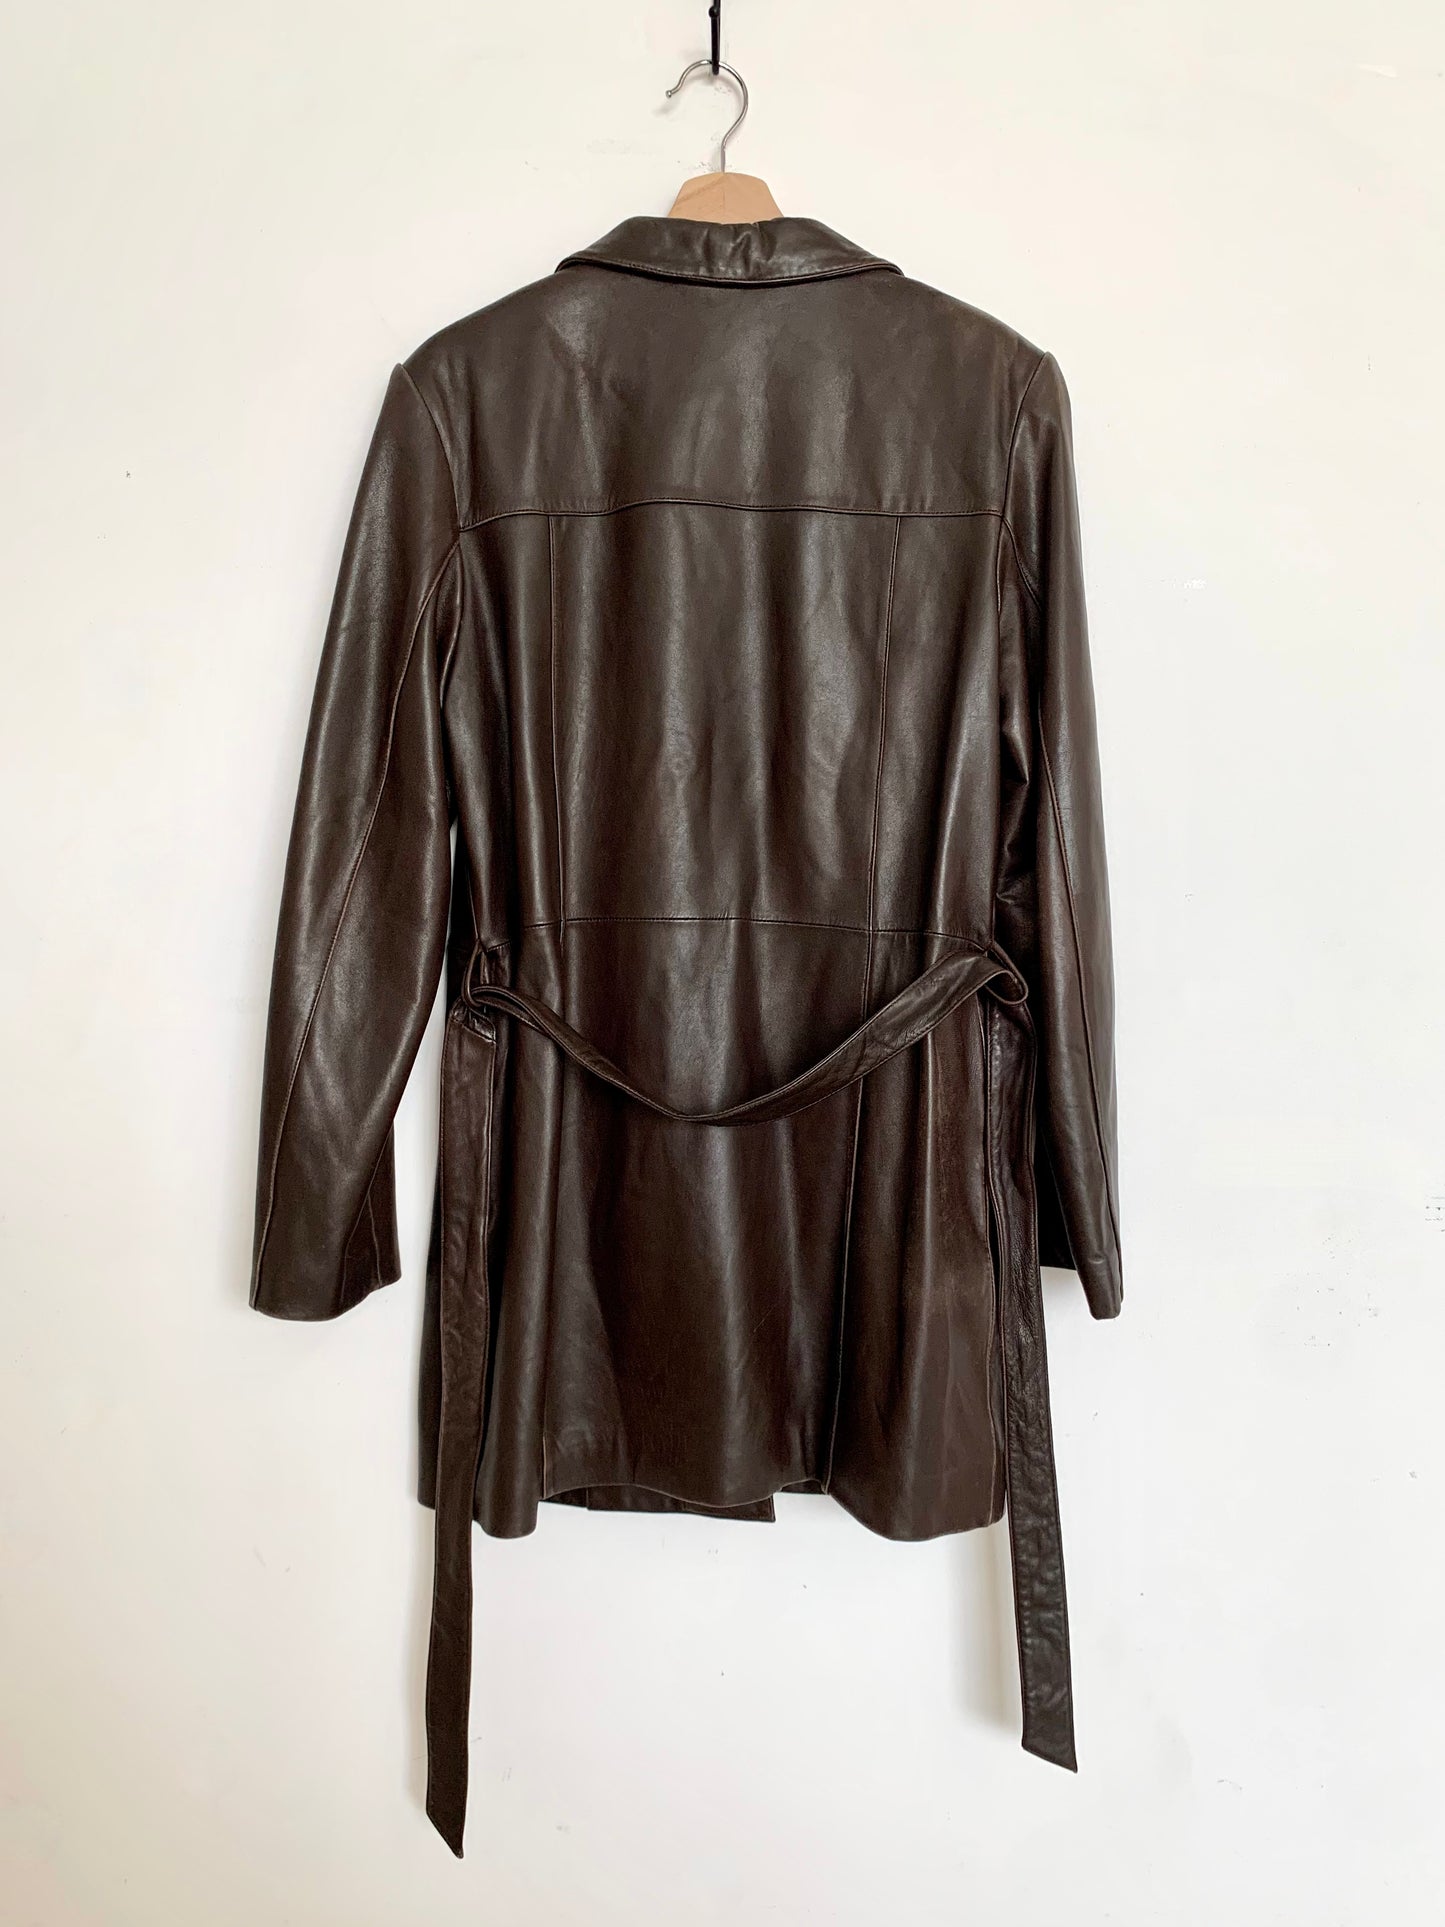 Danier Leather Coat